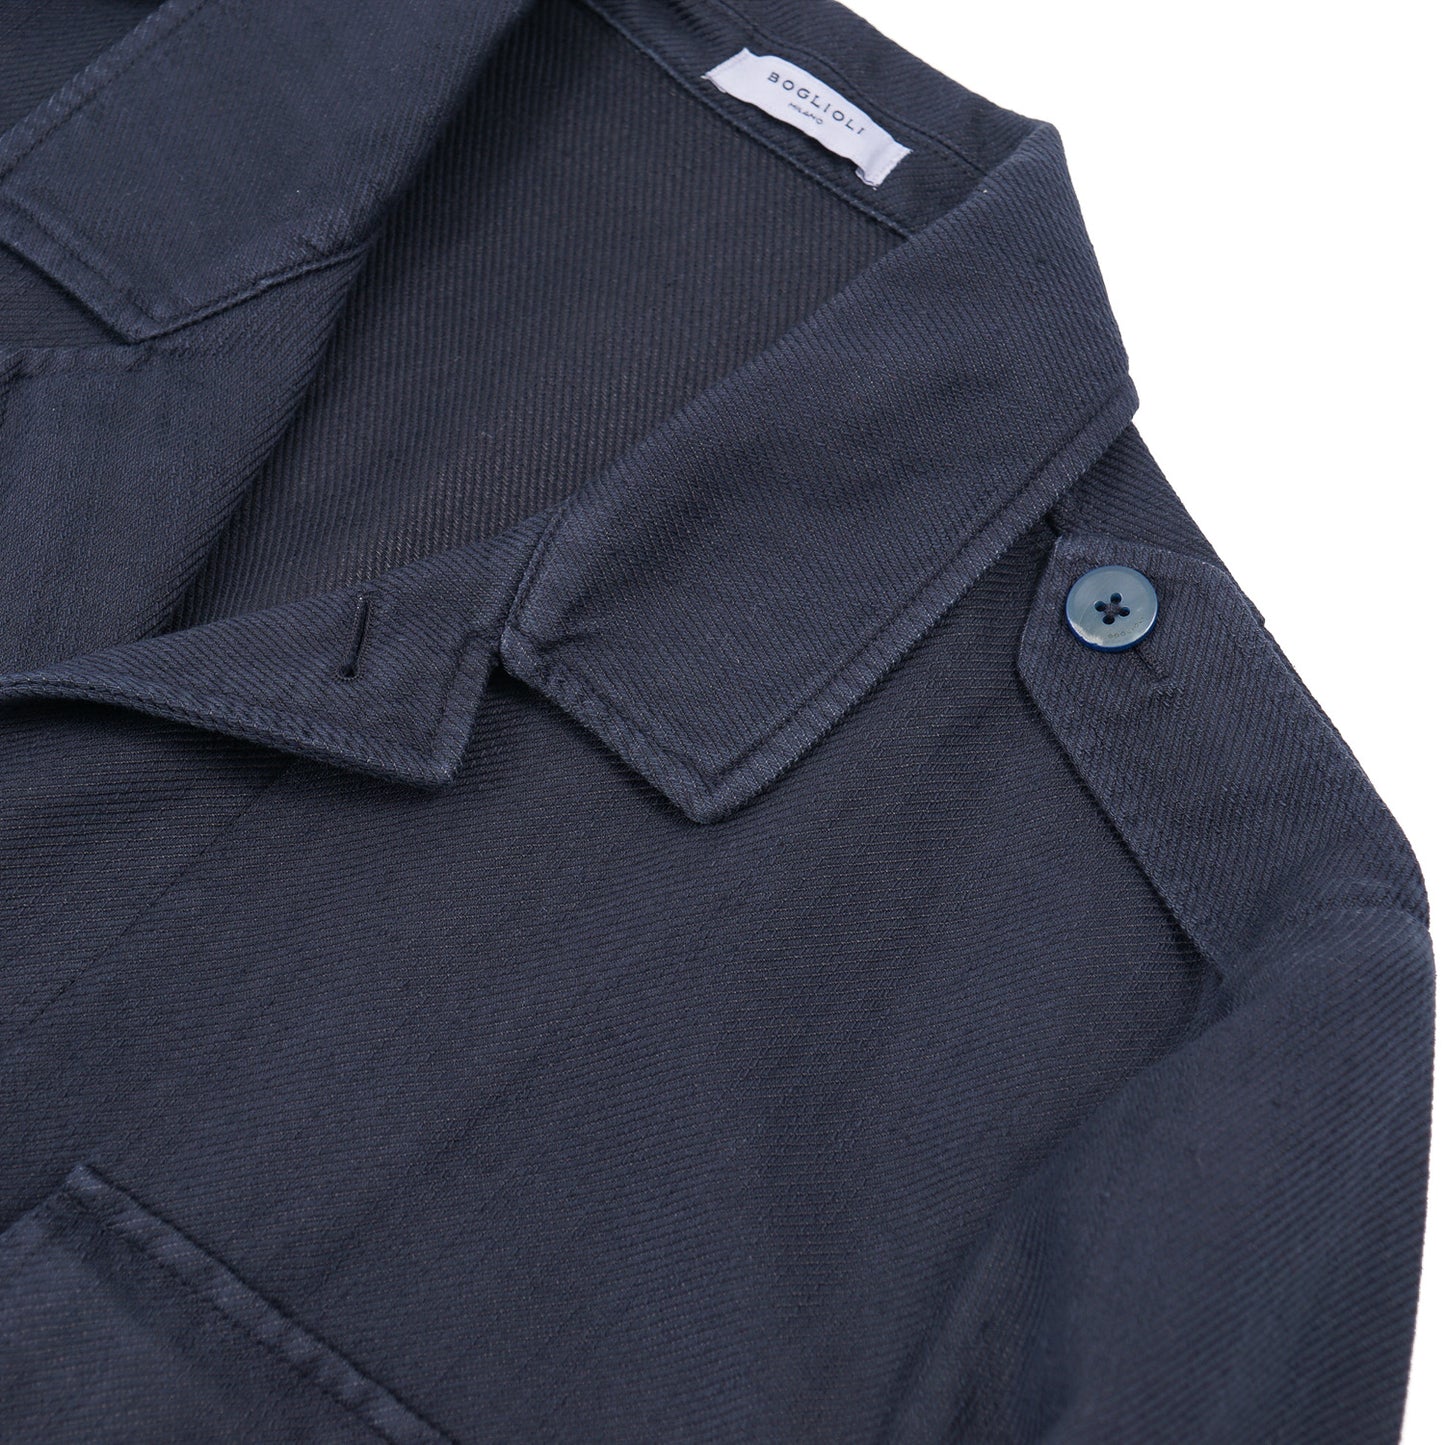 Boglioli Cotton and Linen Field Jacket - Top Shelf Apparel